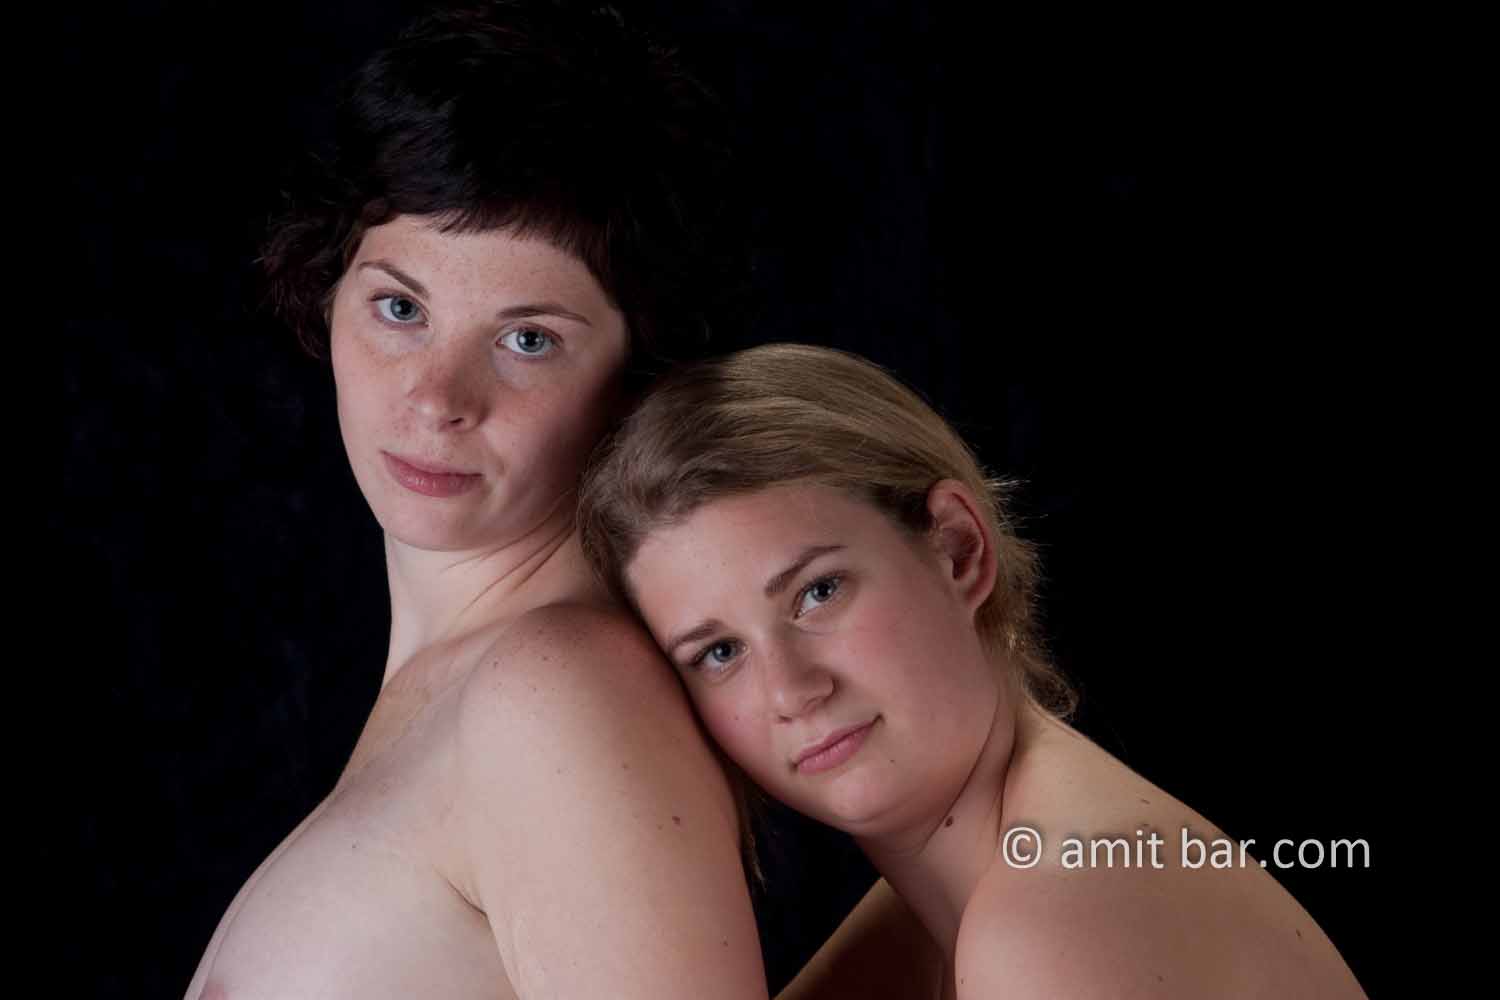 Nude friends IV: Portrait of two nude friends